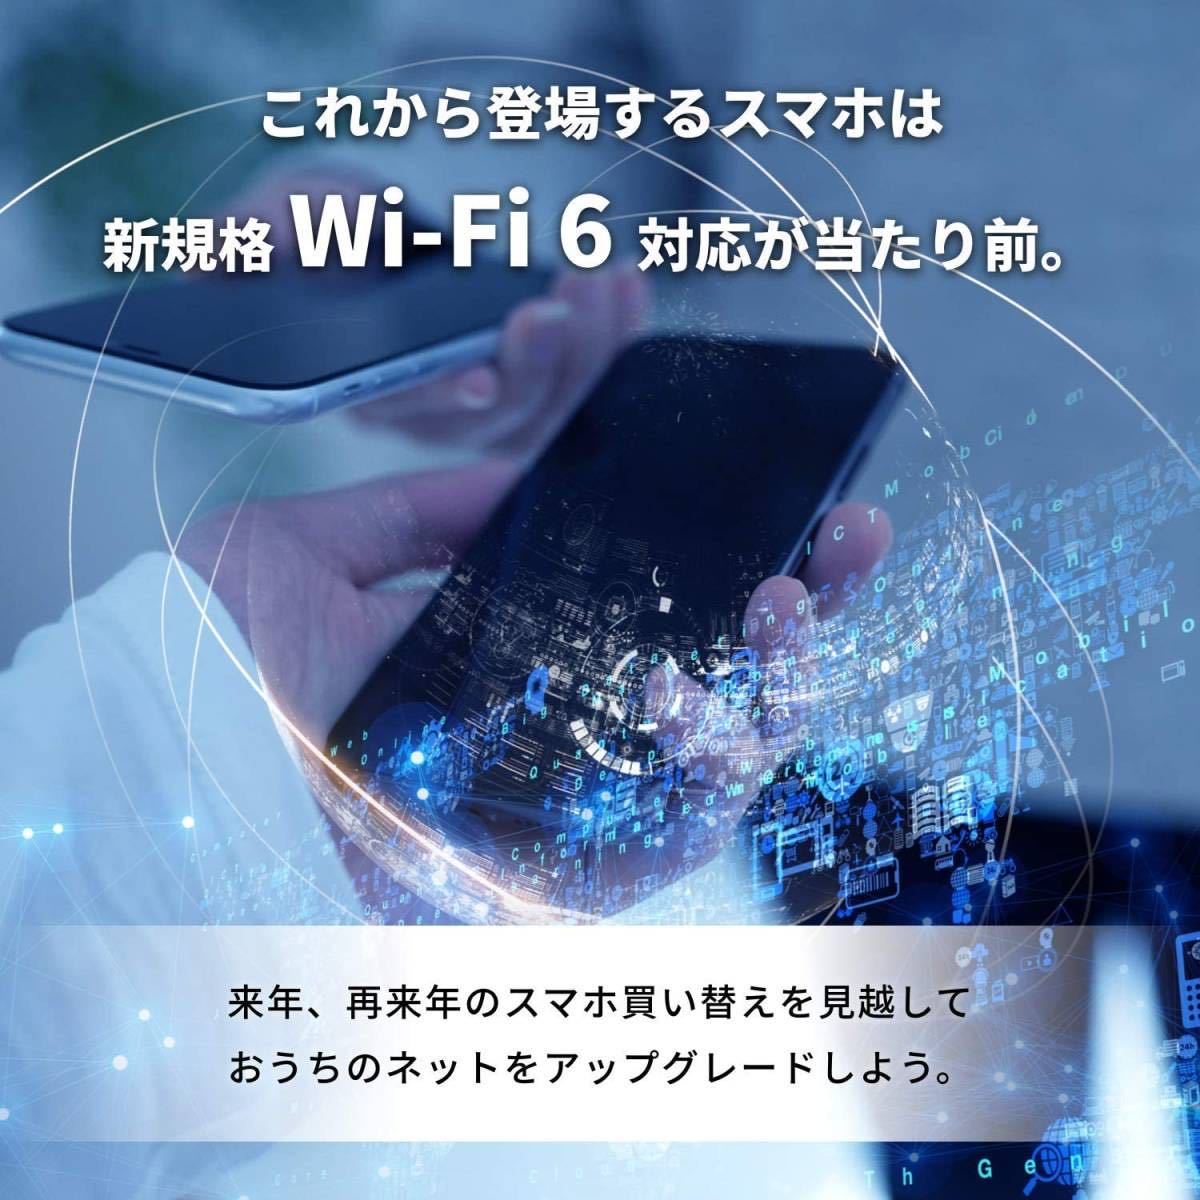 ●送料無料●美品●【BUFFALO　無線LAN親機　Wi-Fi 6 対応ルーター　WSR-3200AX4S-WH　ホワイト】最新規格 WiFi6(11ax)対応　2401+800Mbps